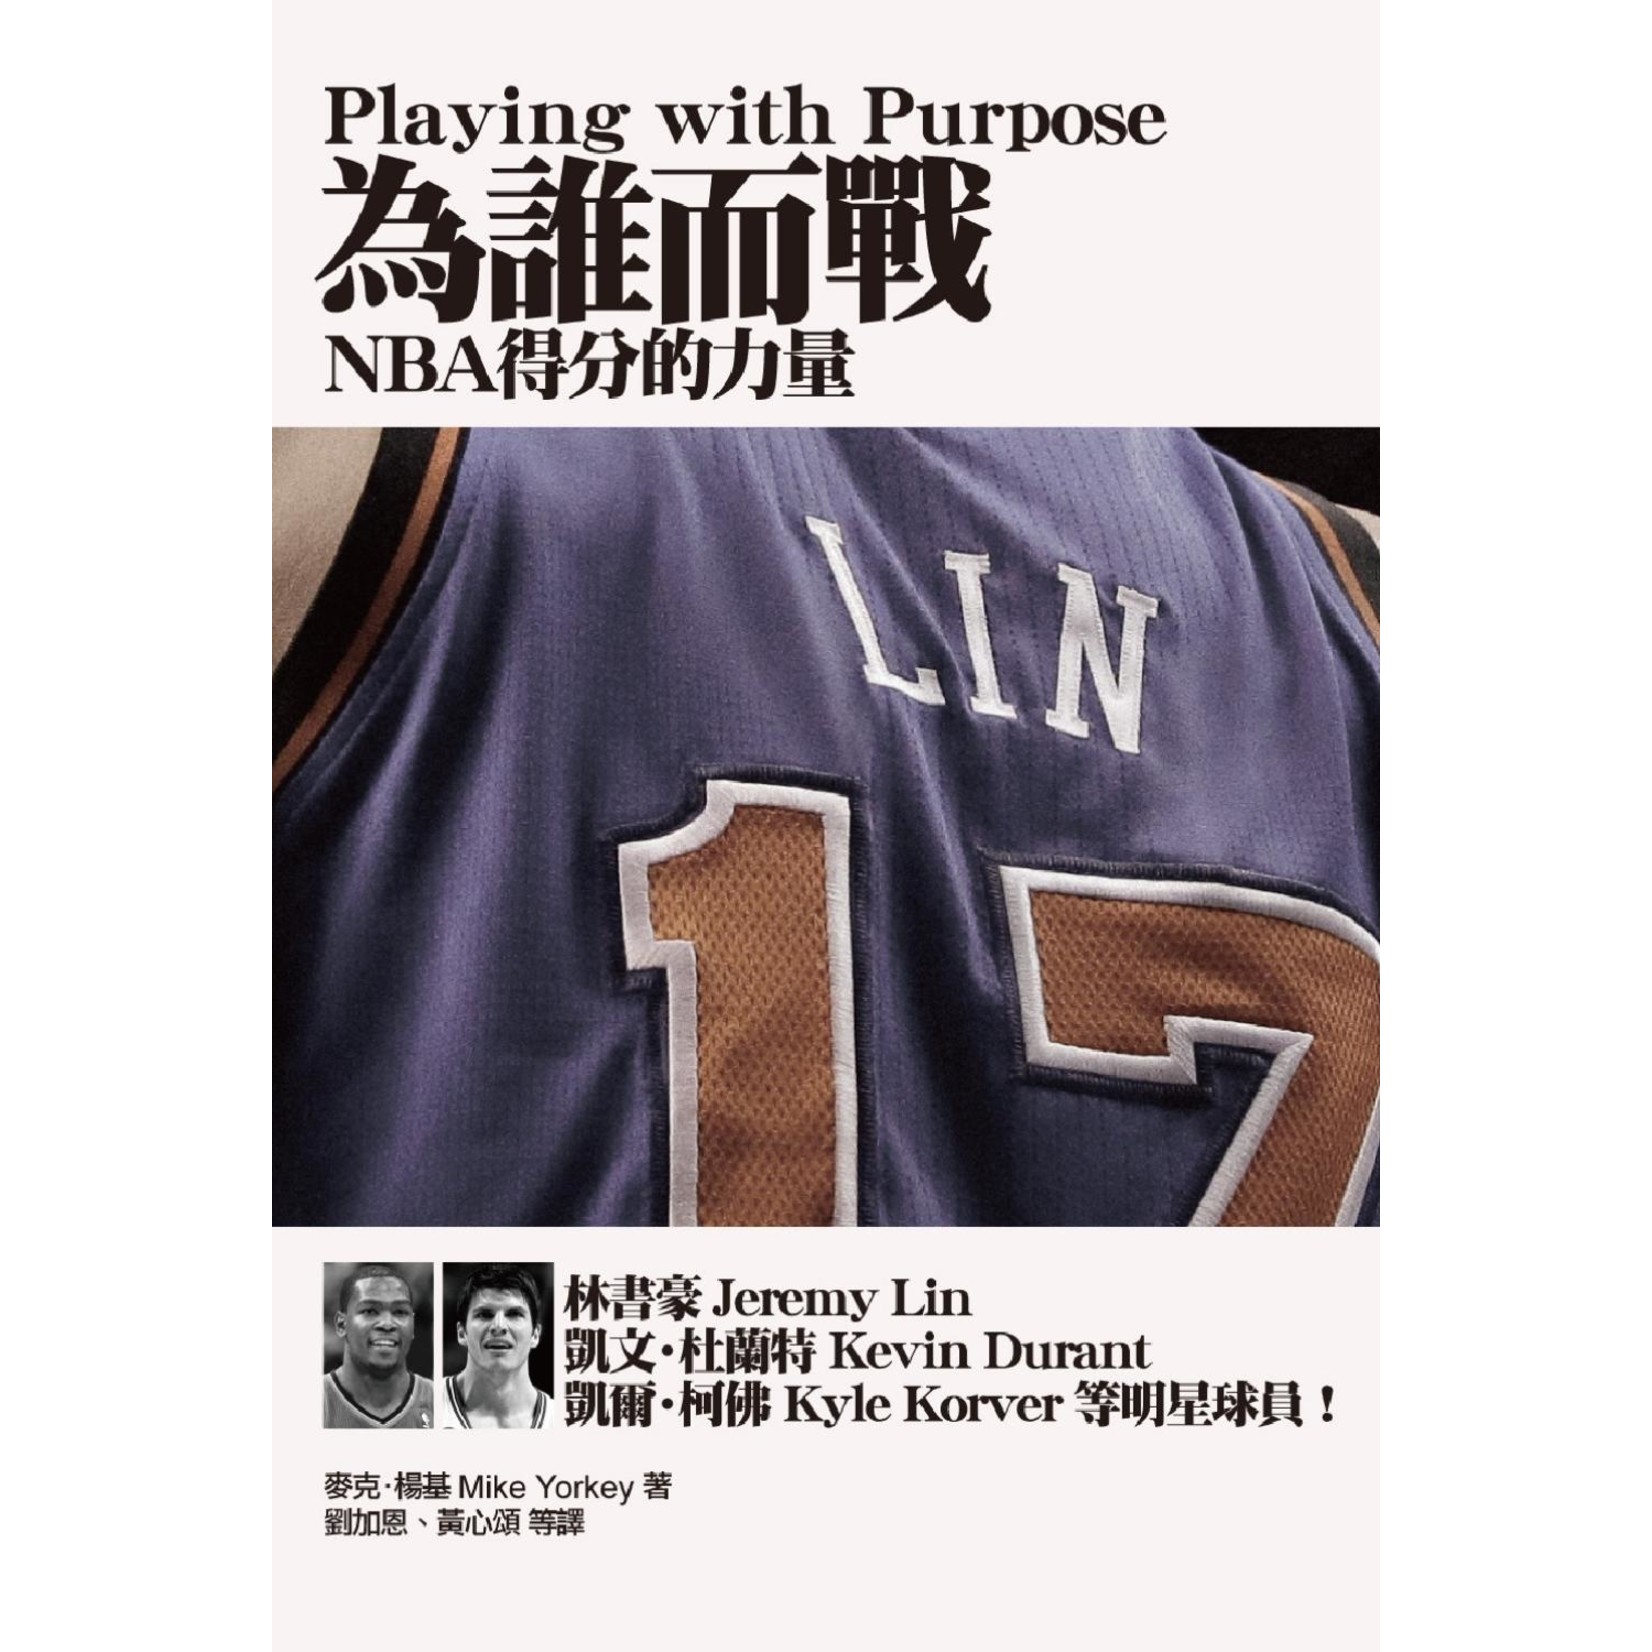 道聲 Taosheng Taiwan 為誰而戰：NBA得分的力量  | Playing with Purpose